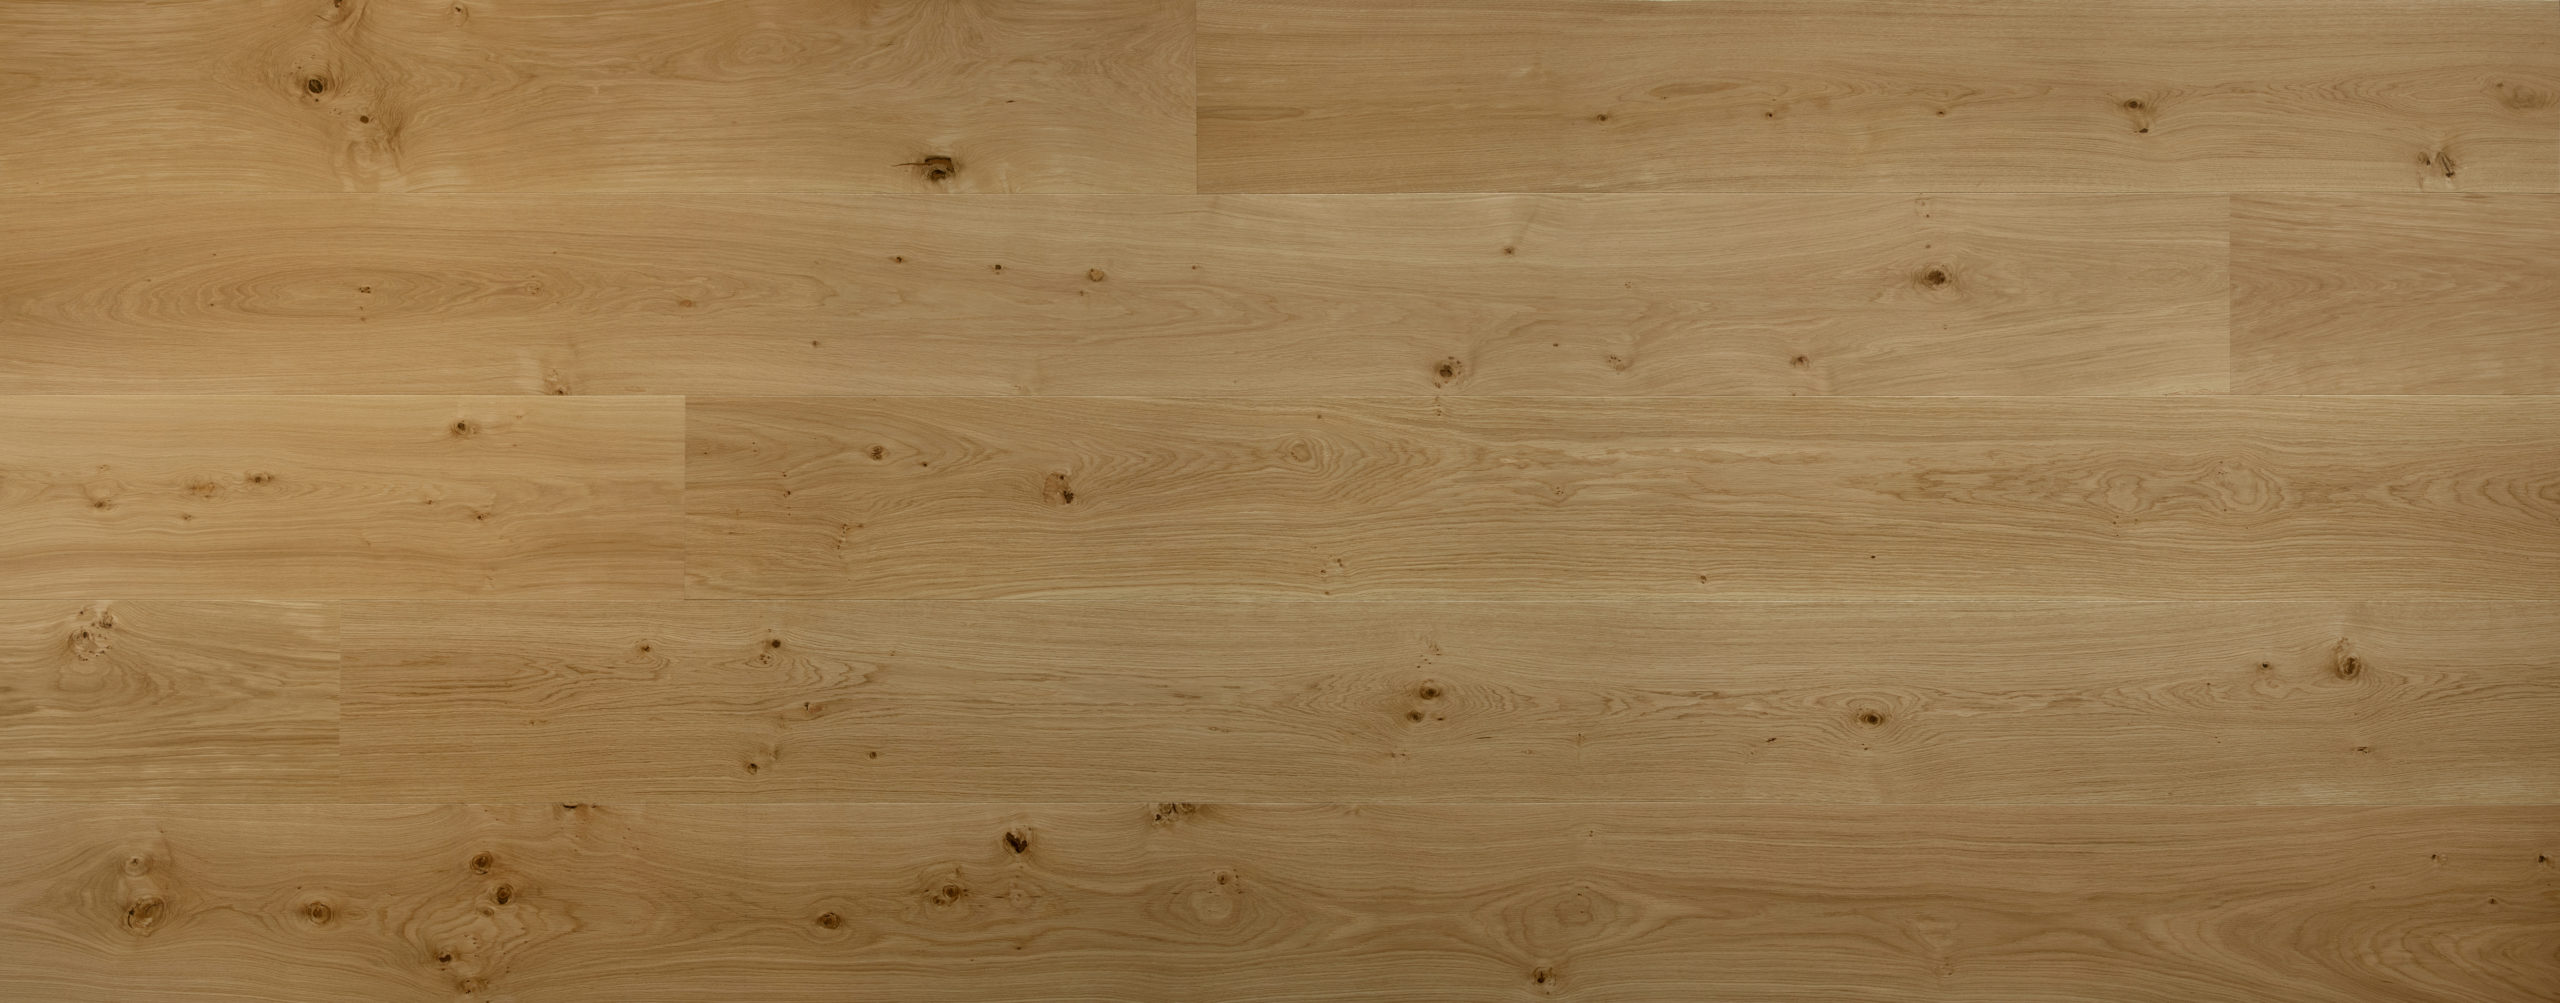 French White Oak Flooring Vision Wood, French Hardwood Floors